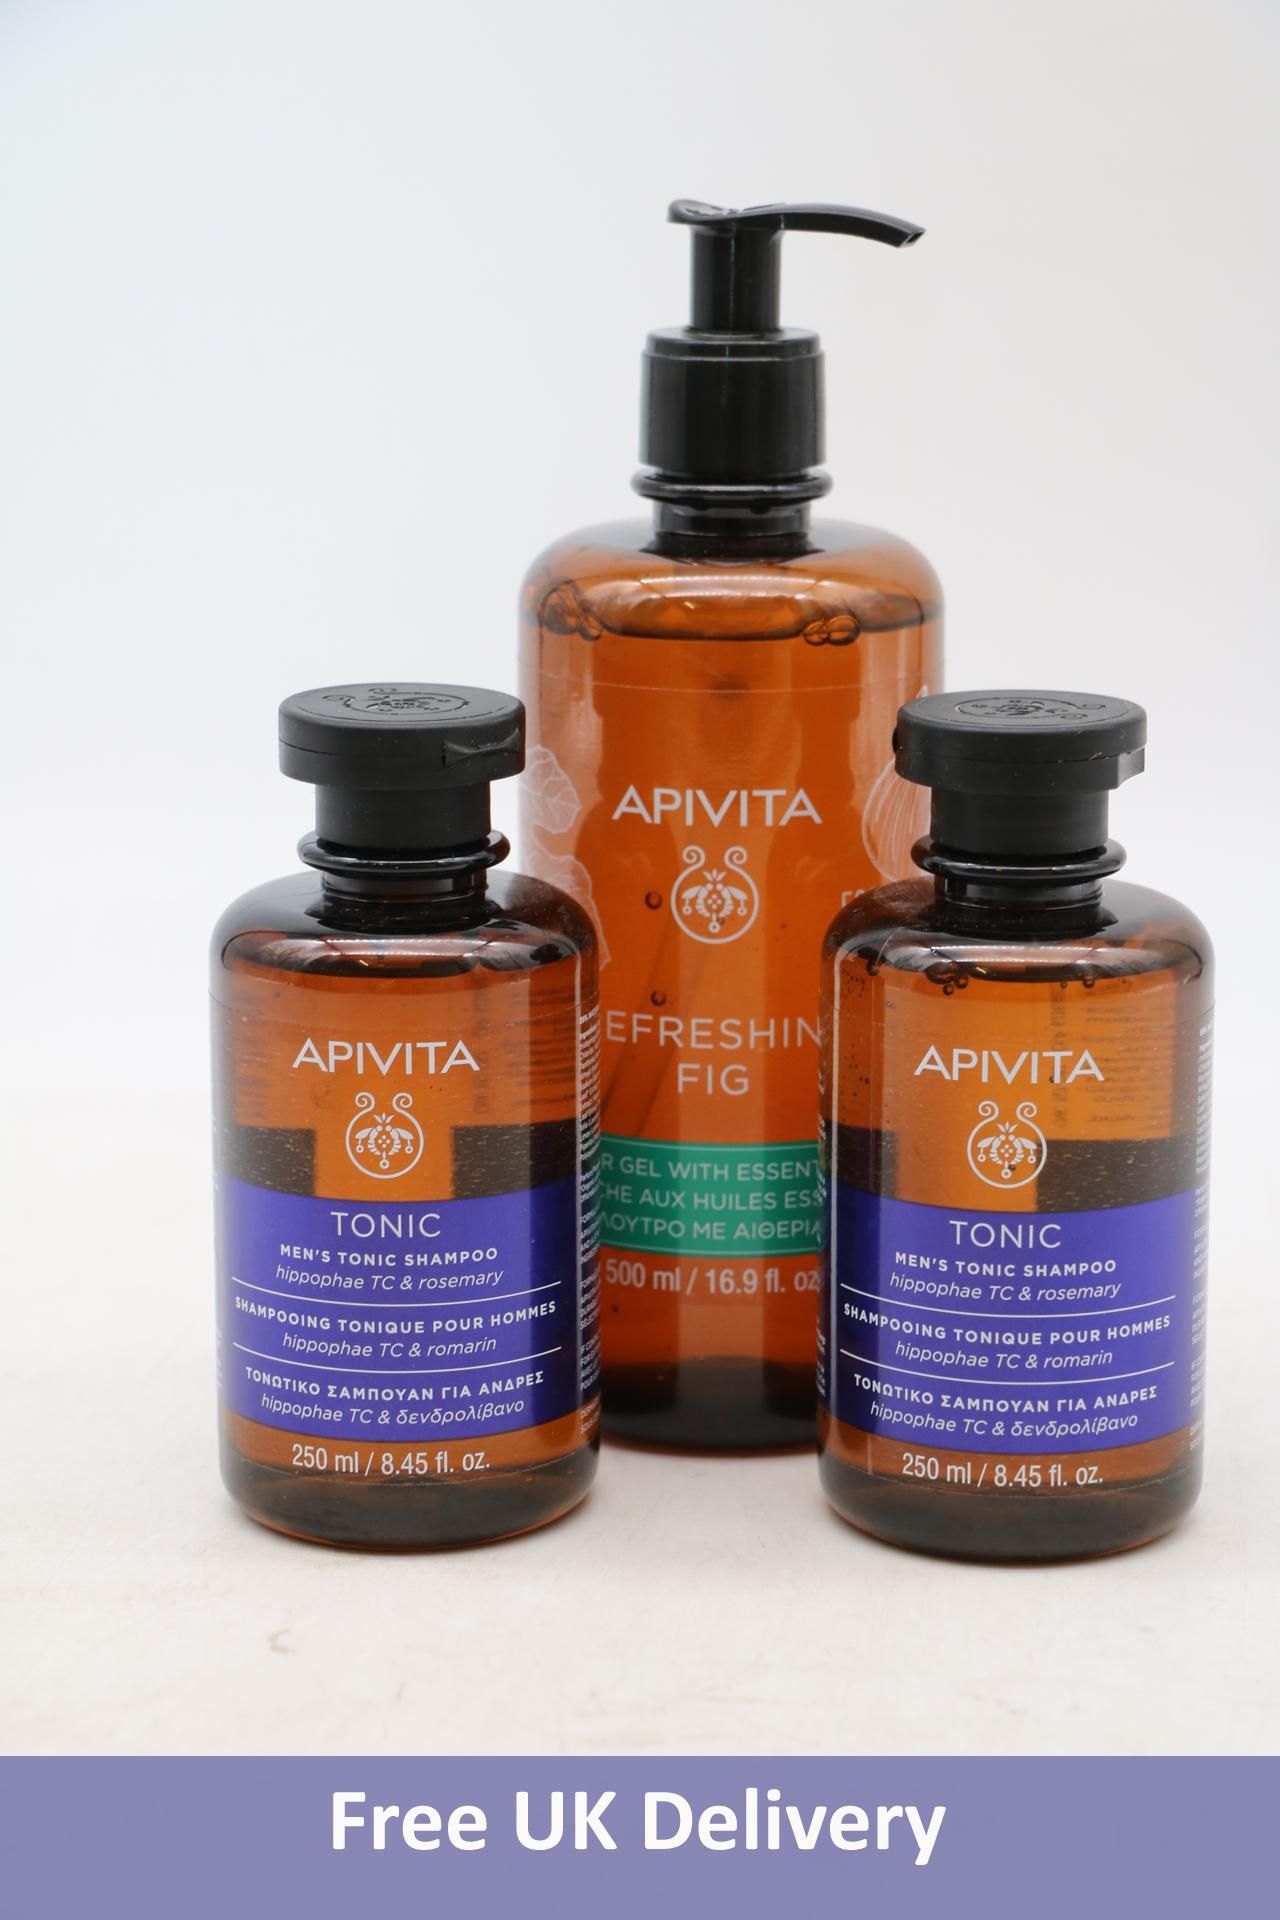 Two Apivita Men's Tonic Shampoo's 250ml and One Refreshing Fig Shower Gel 500ml